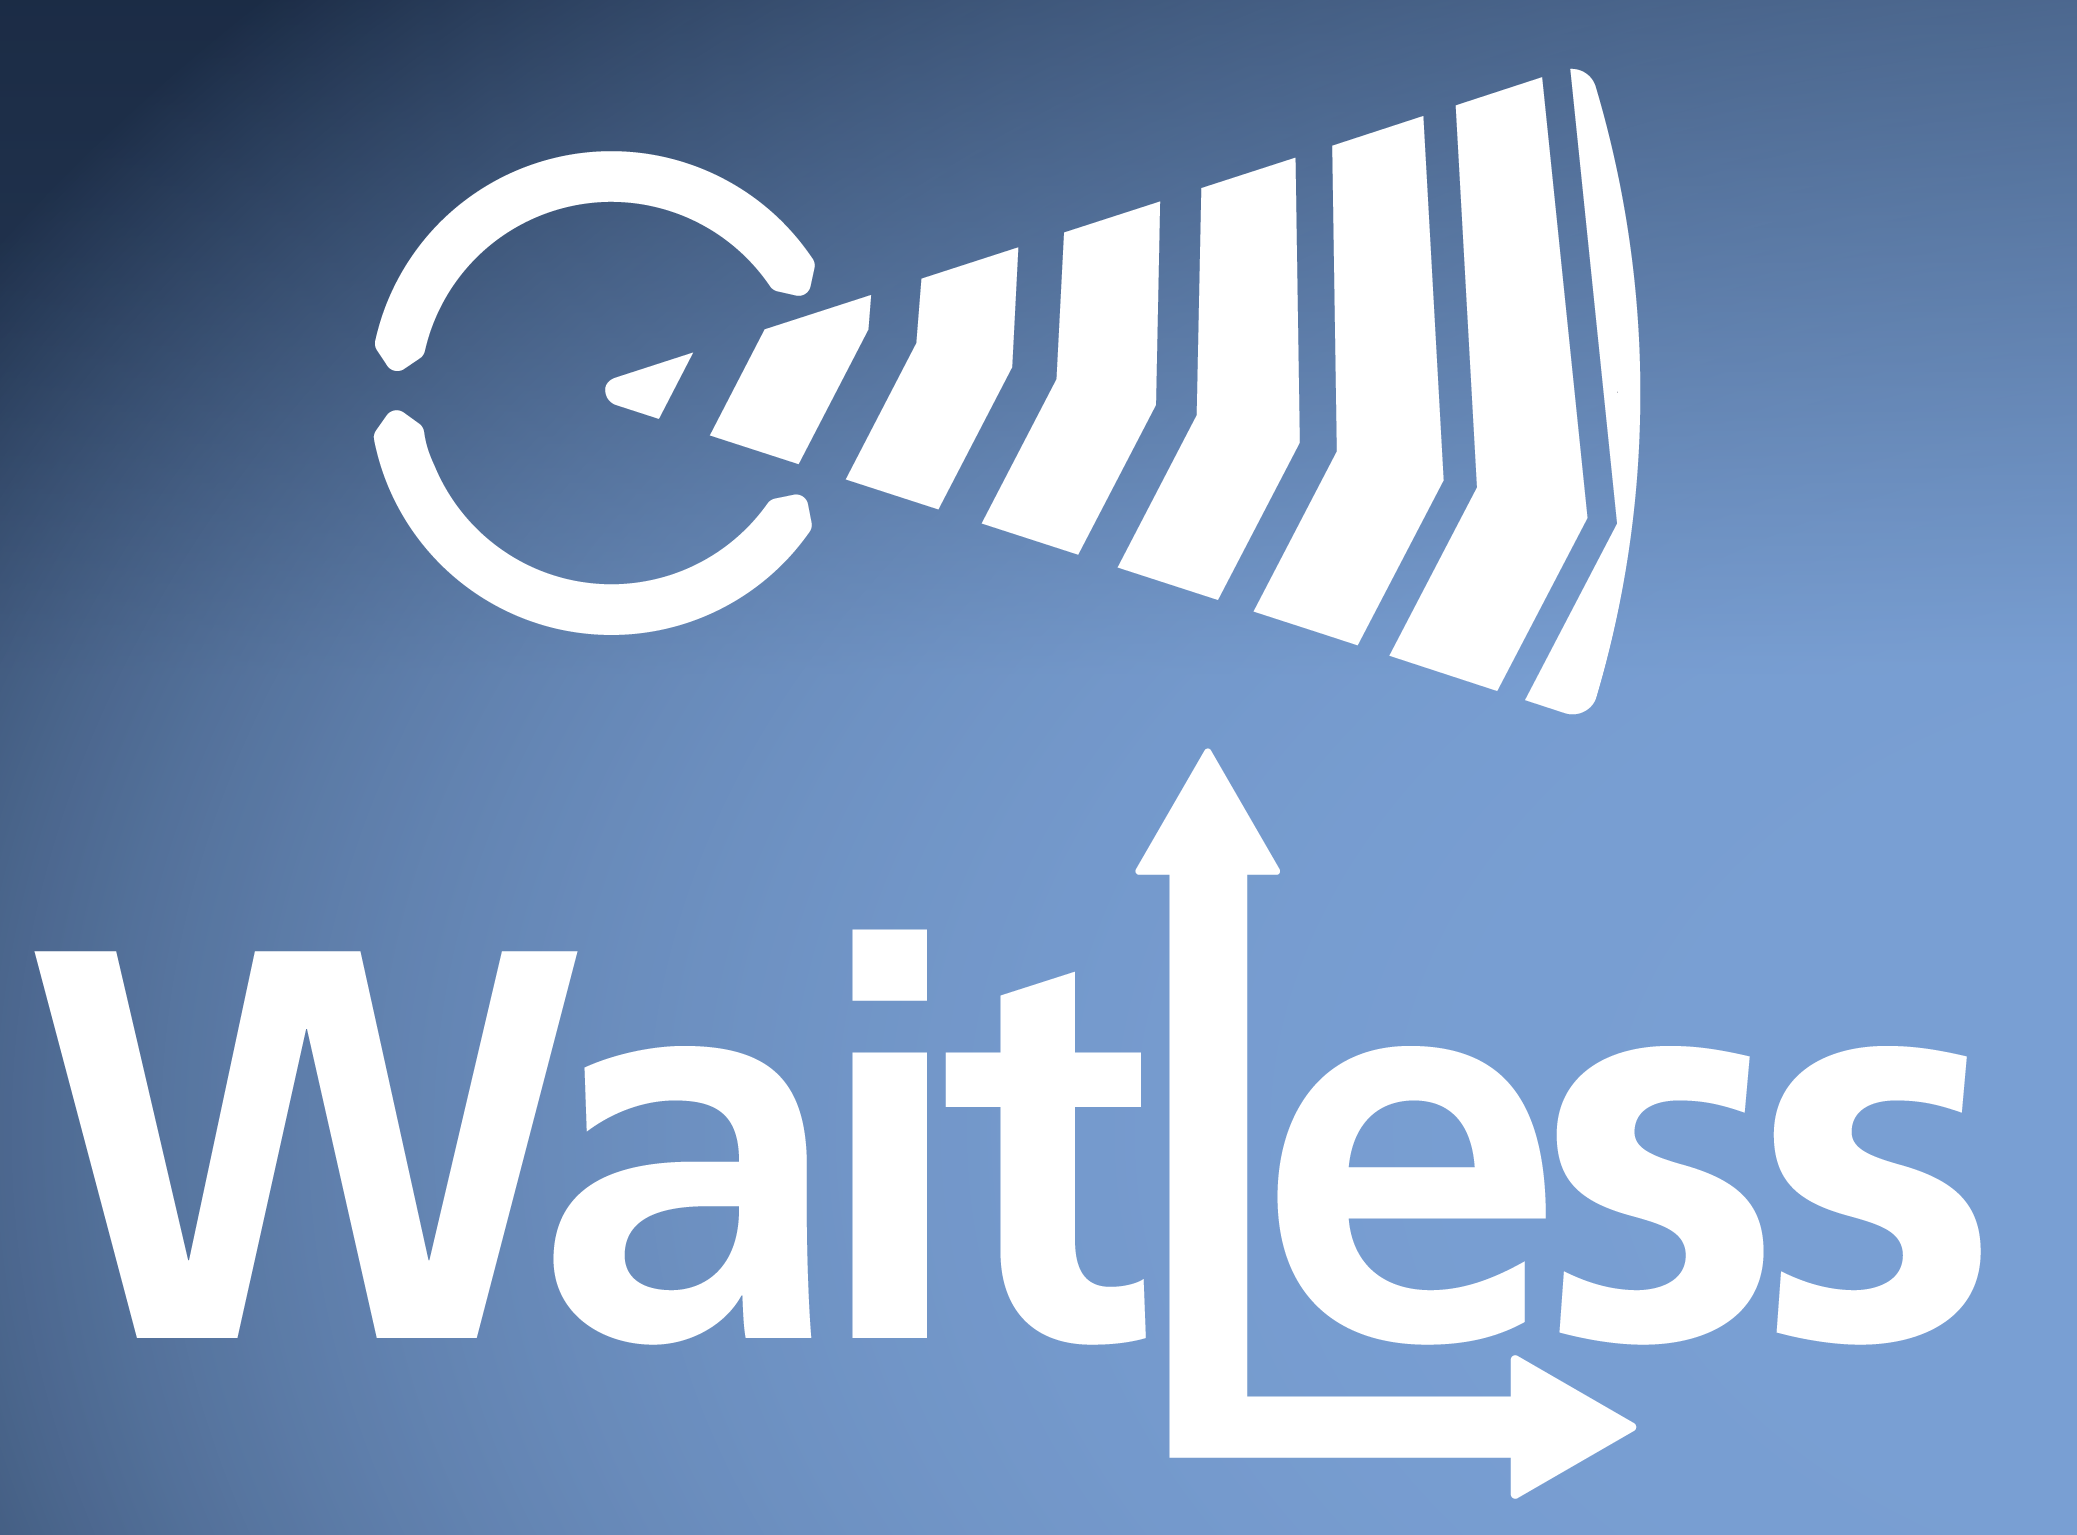 WaitLess App – Survey